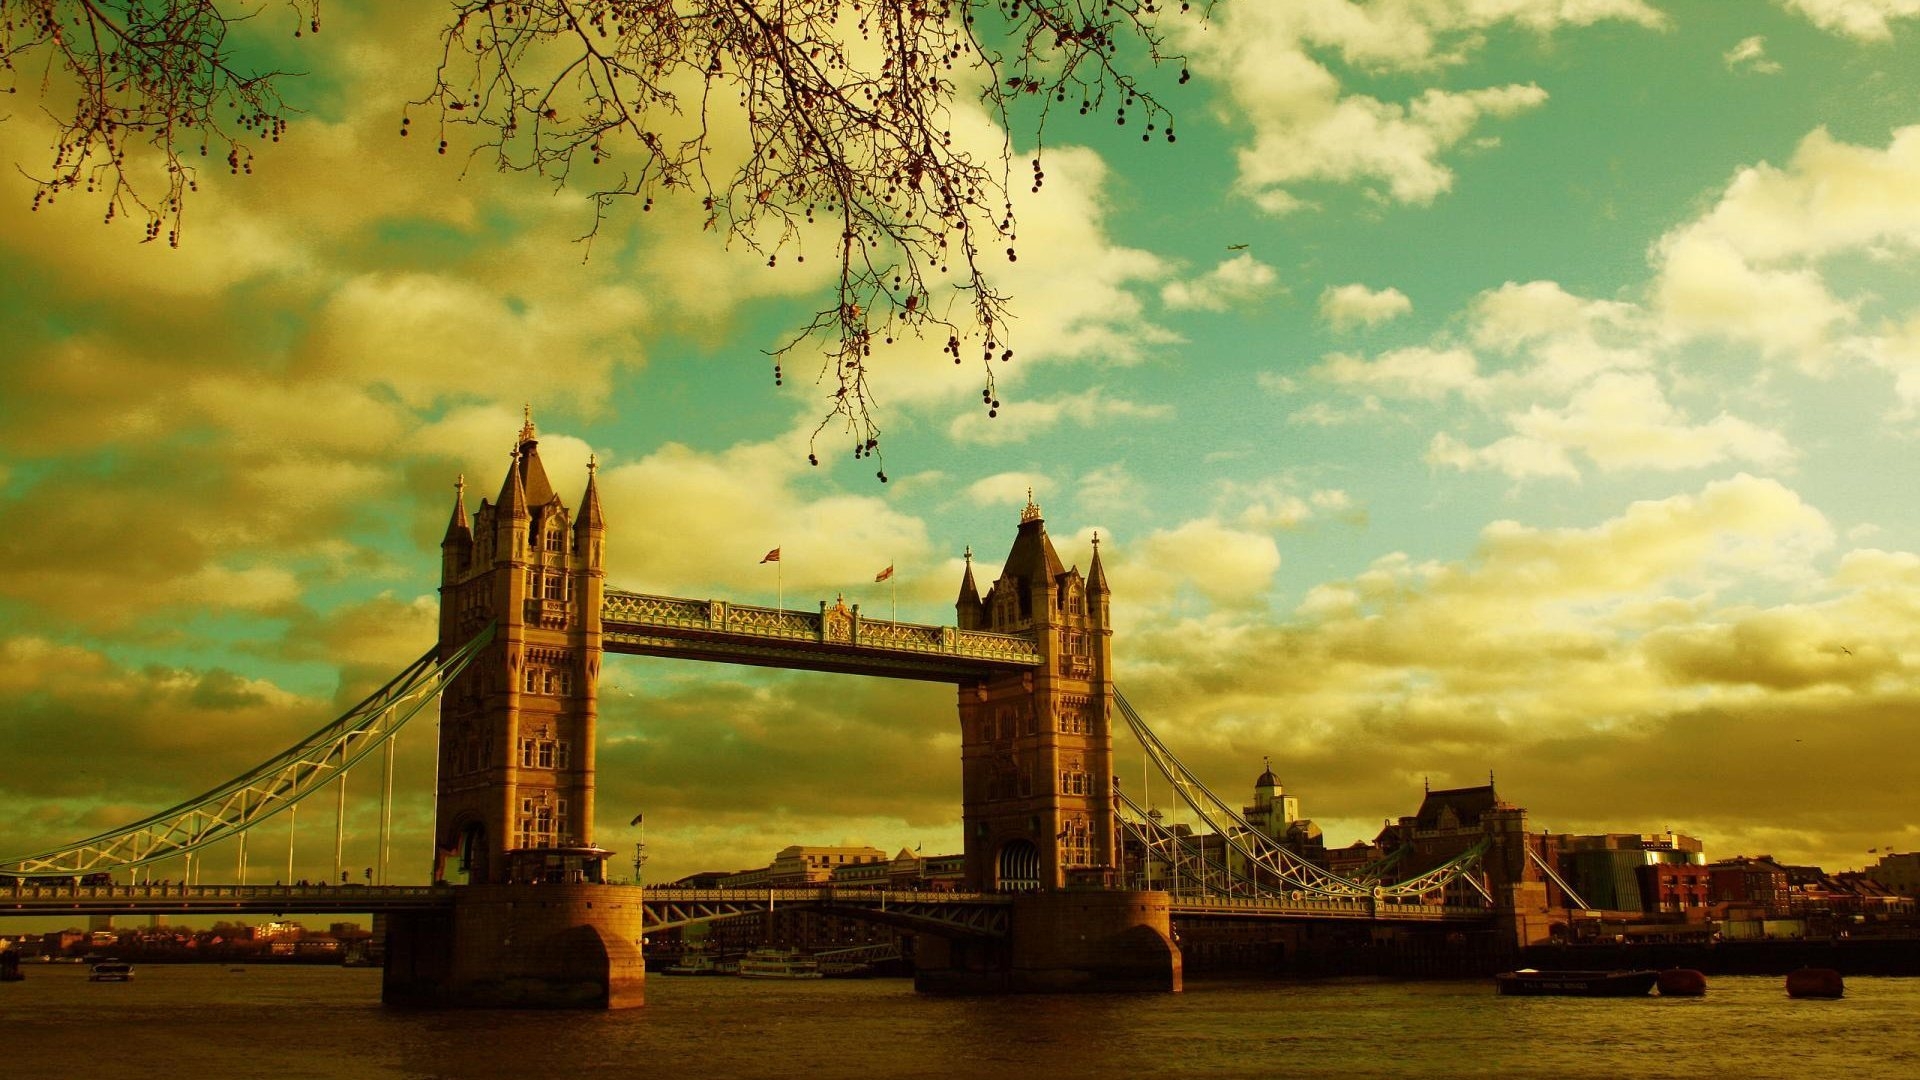 London Tower Bridge for 1920 x 1080 HDTV 1080p resolution